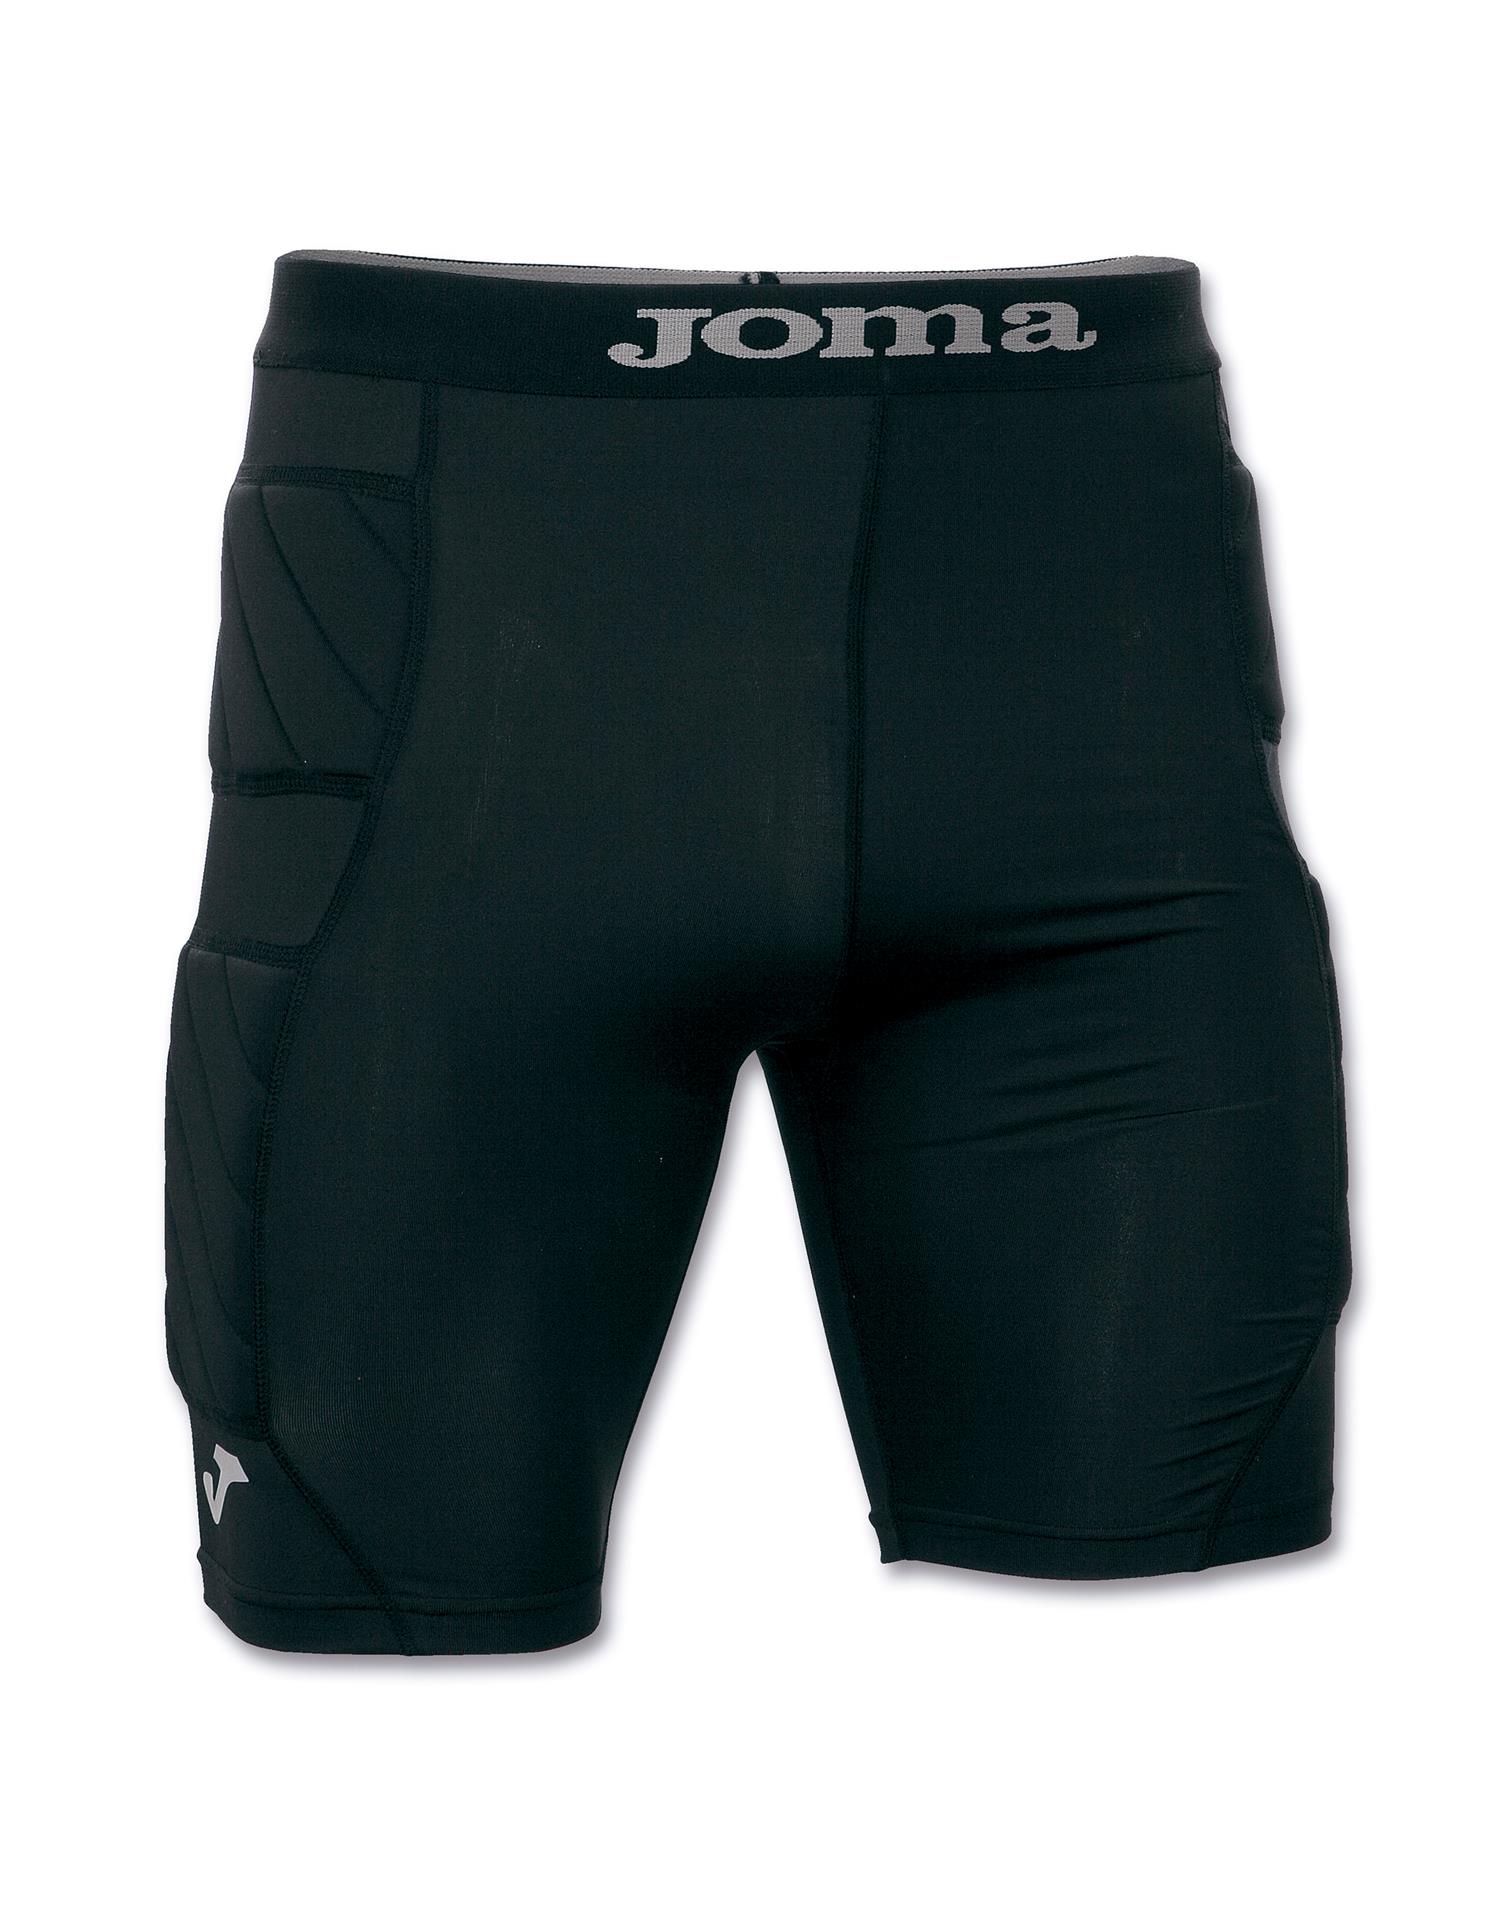 JOMA Pantalone protec short (S-M - NERO)